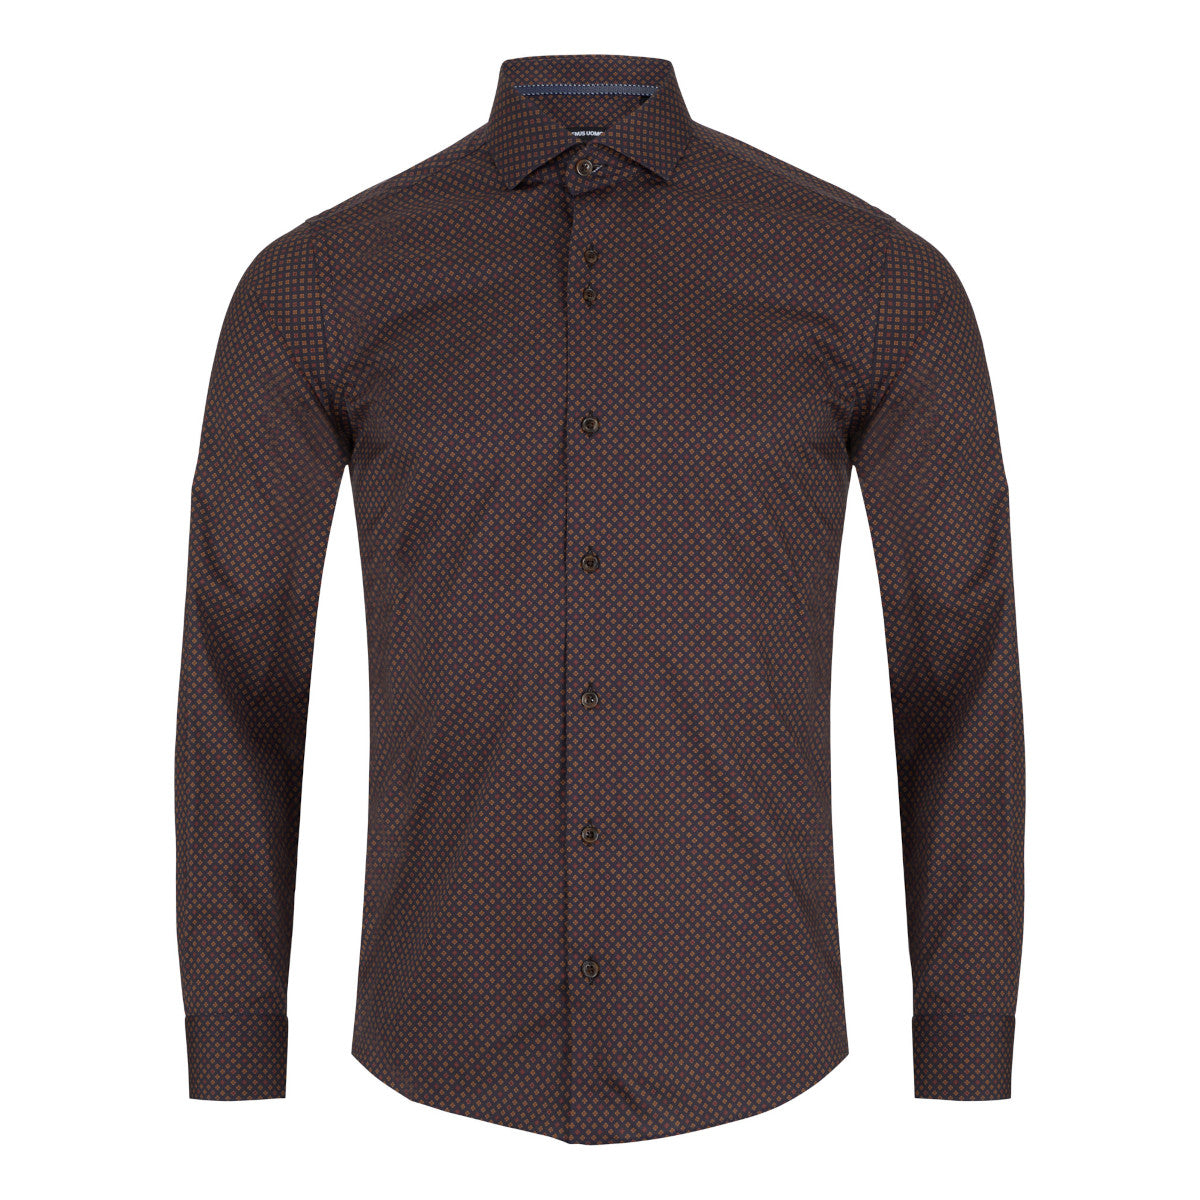 Remus Uomo Semi Formal Shirt 48 Black / Brown